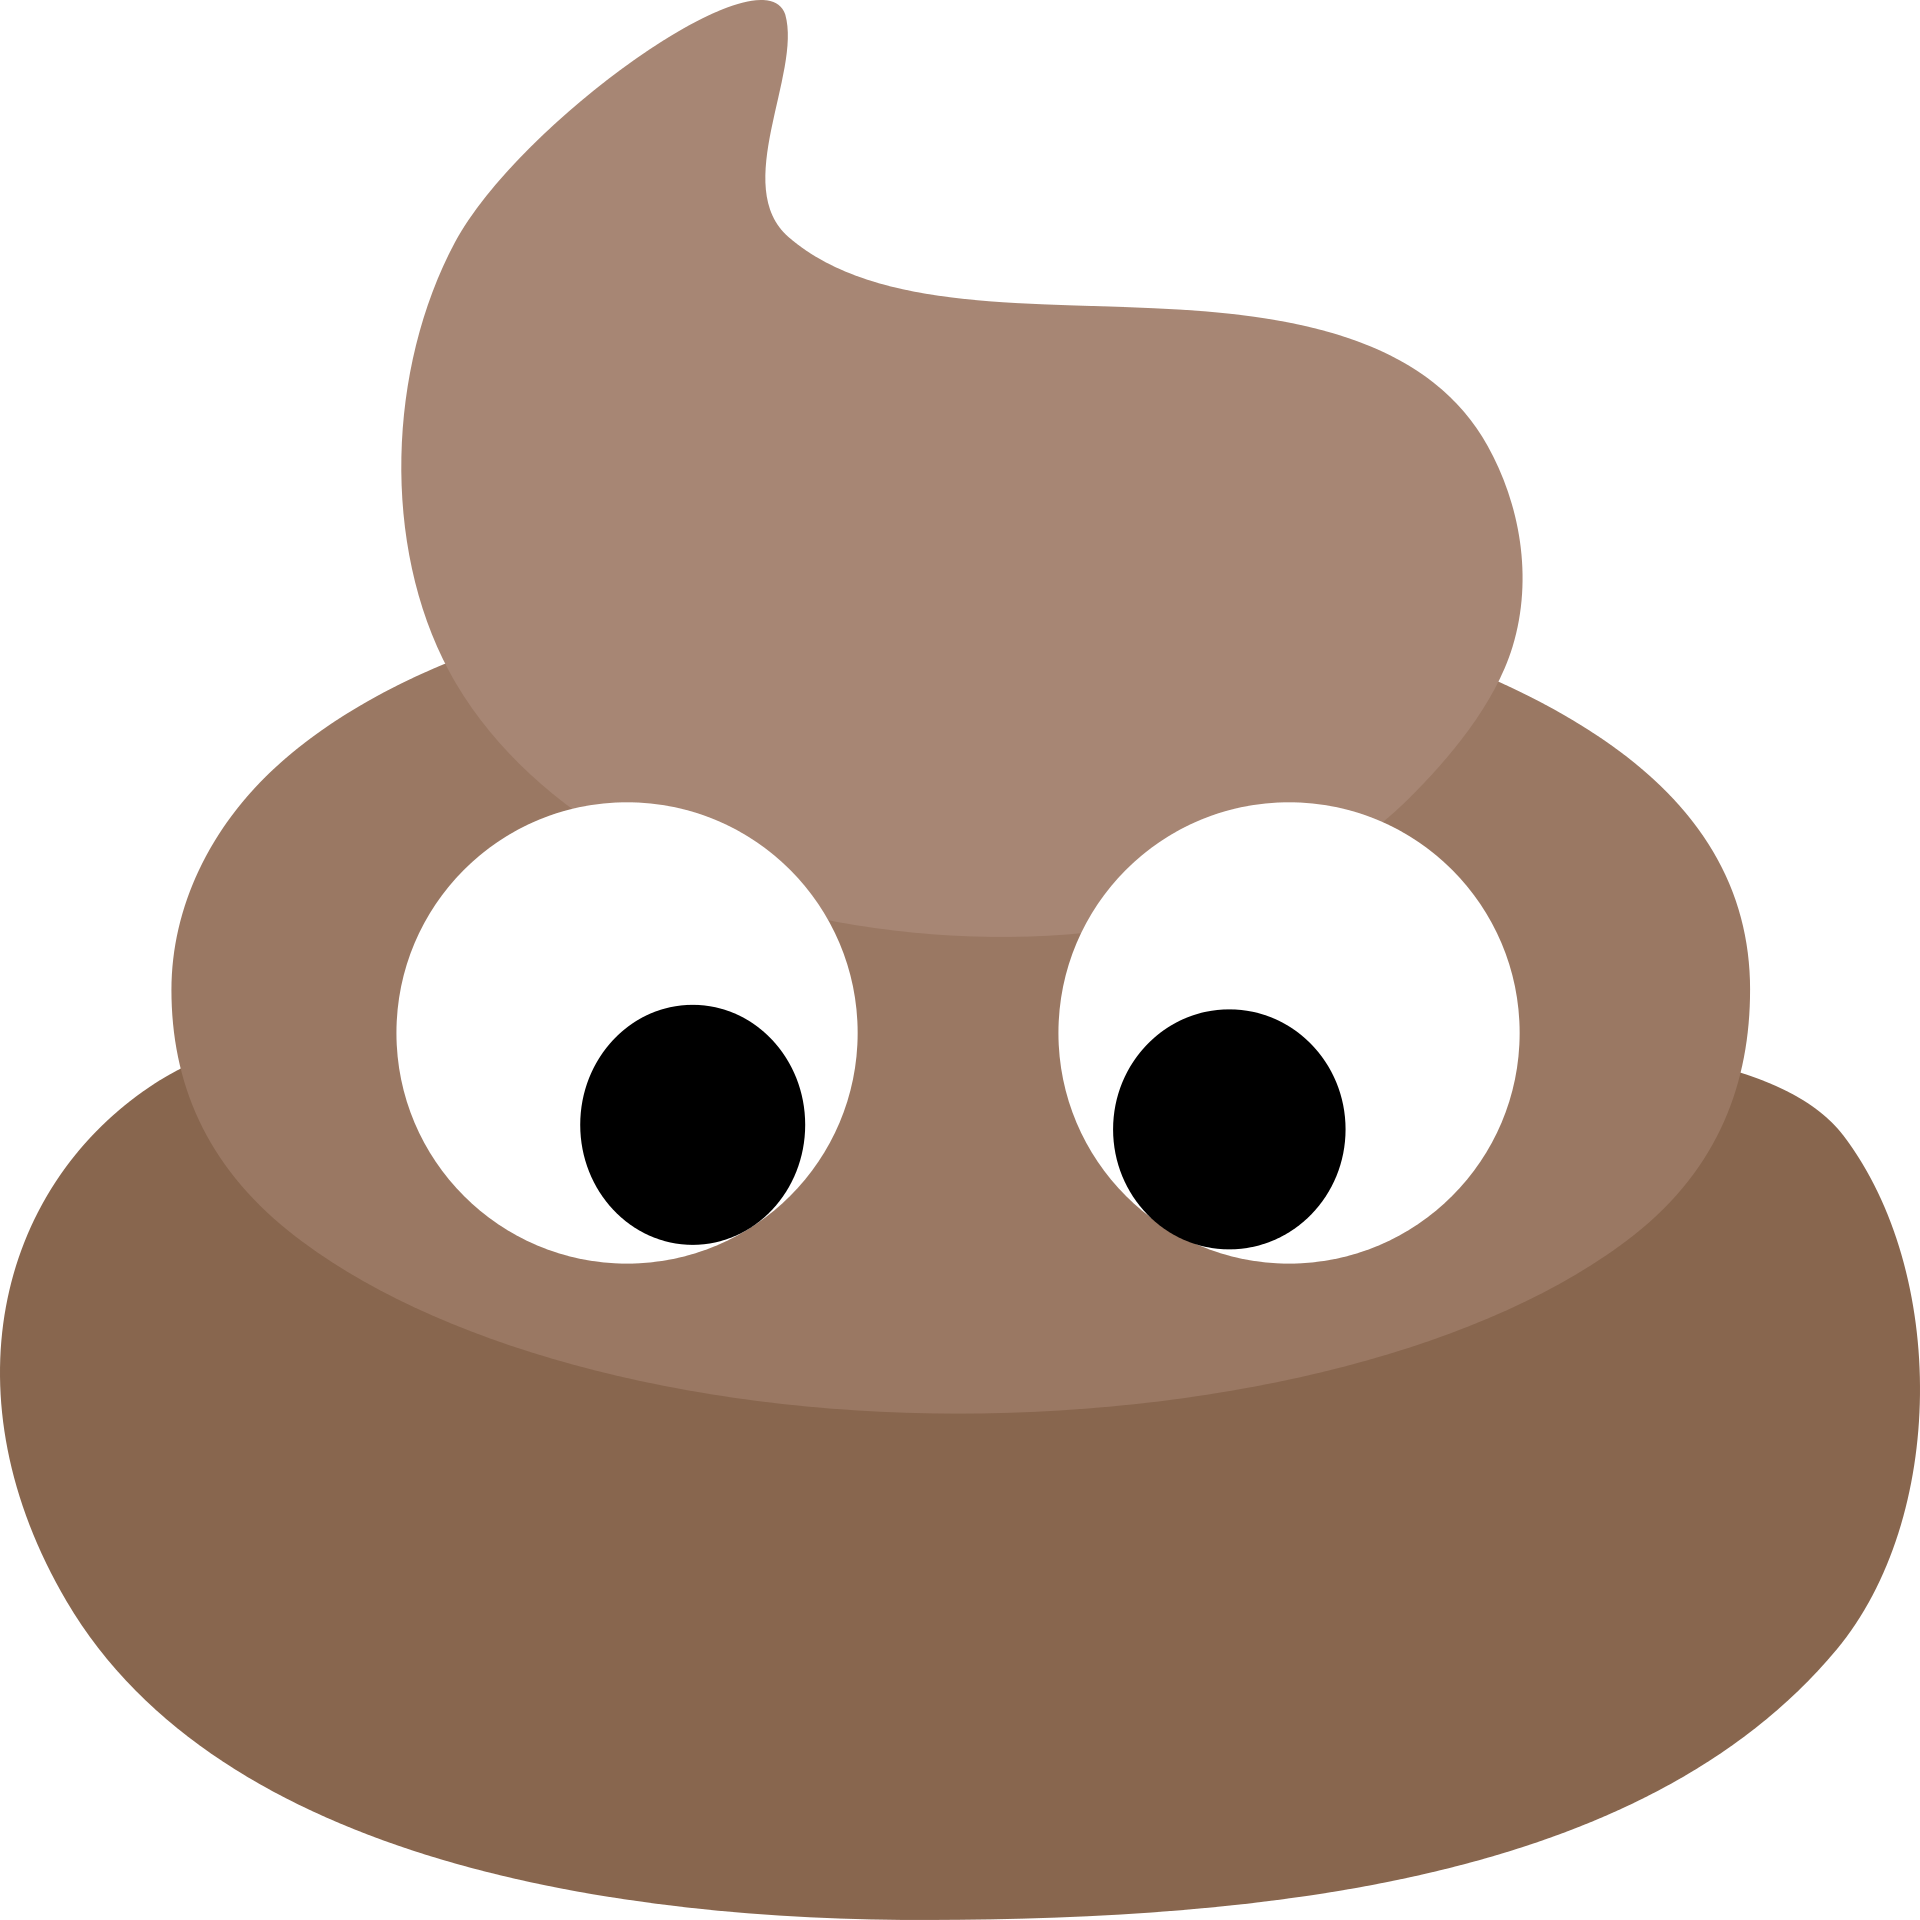 Poop Transparent Image